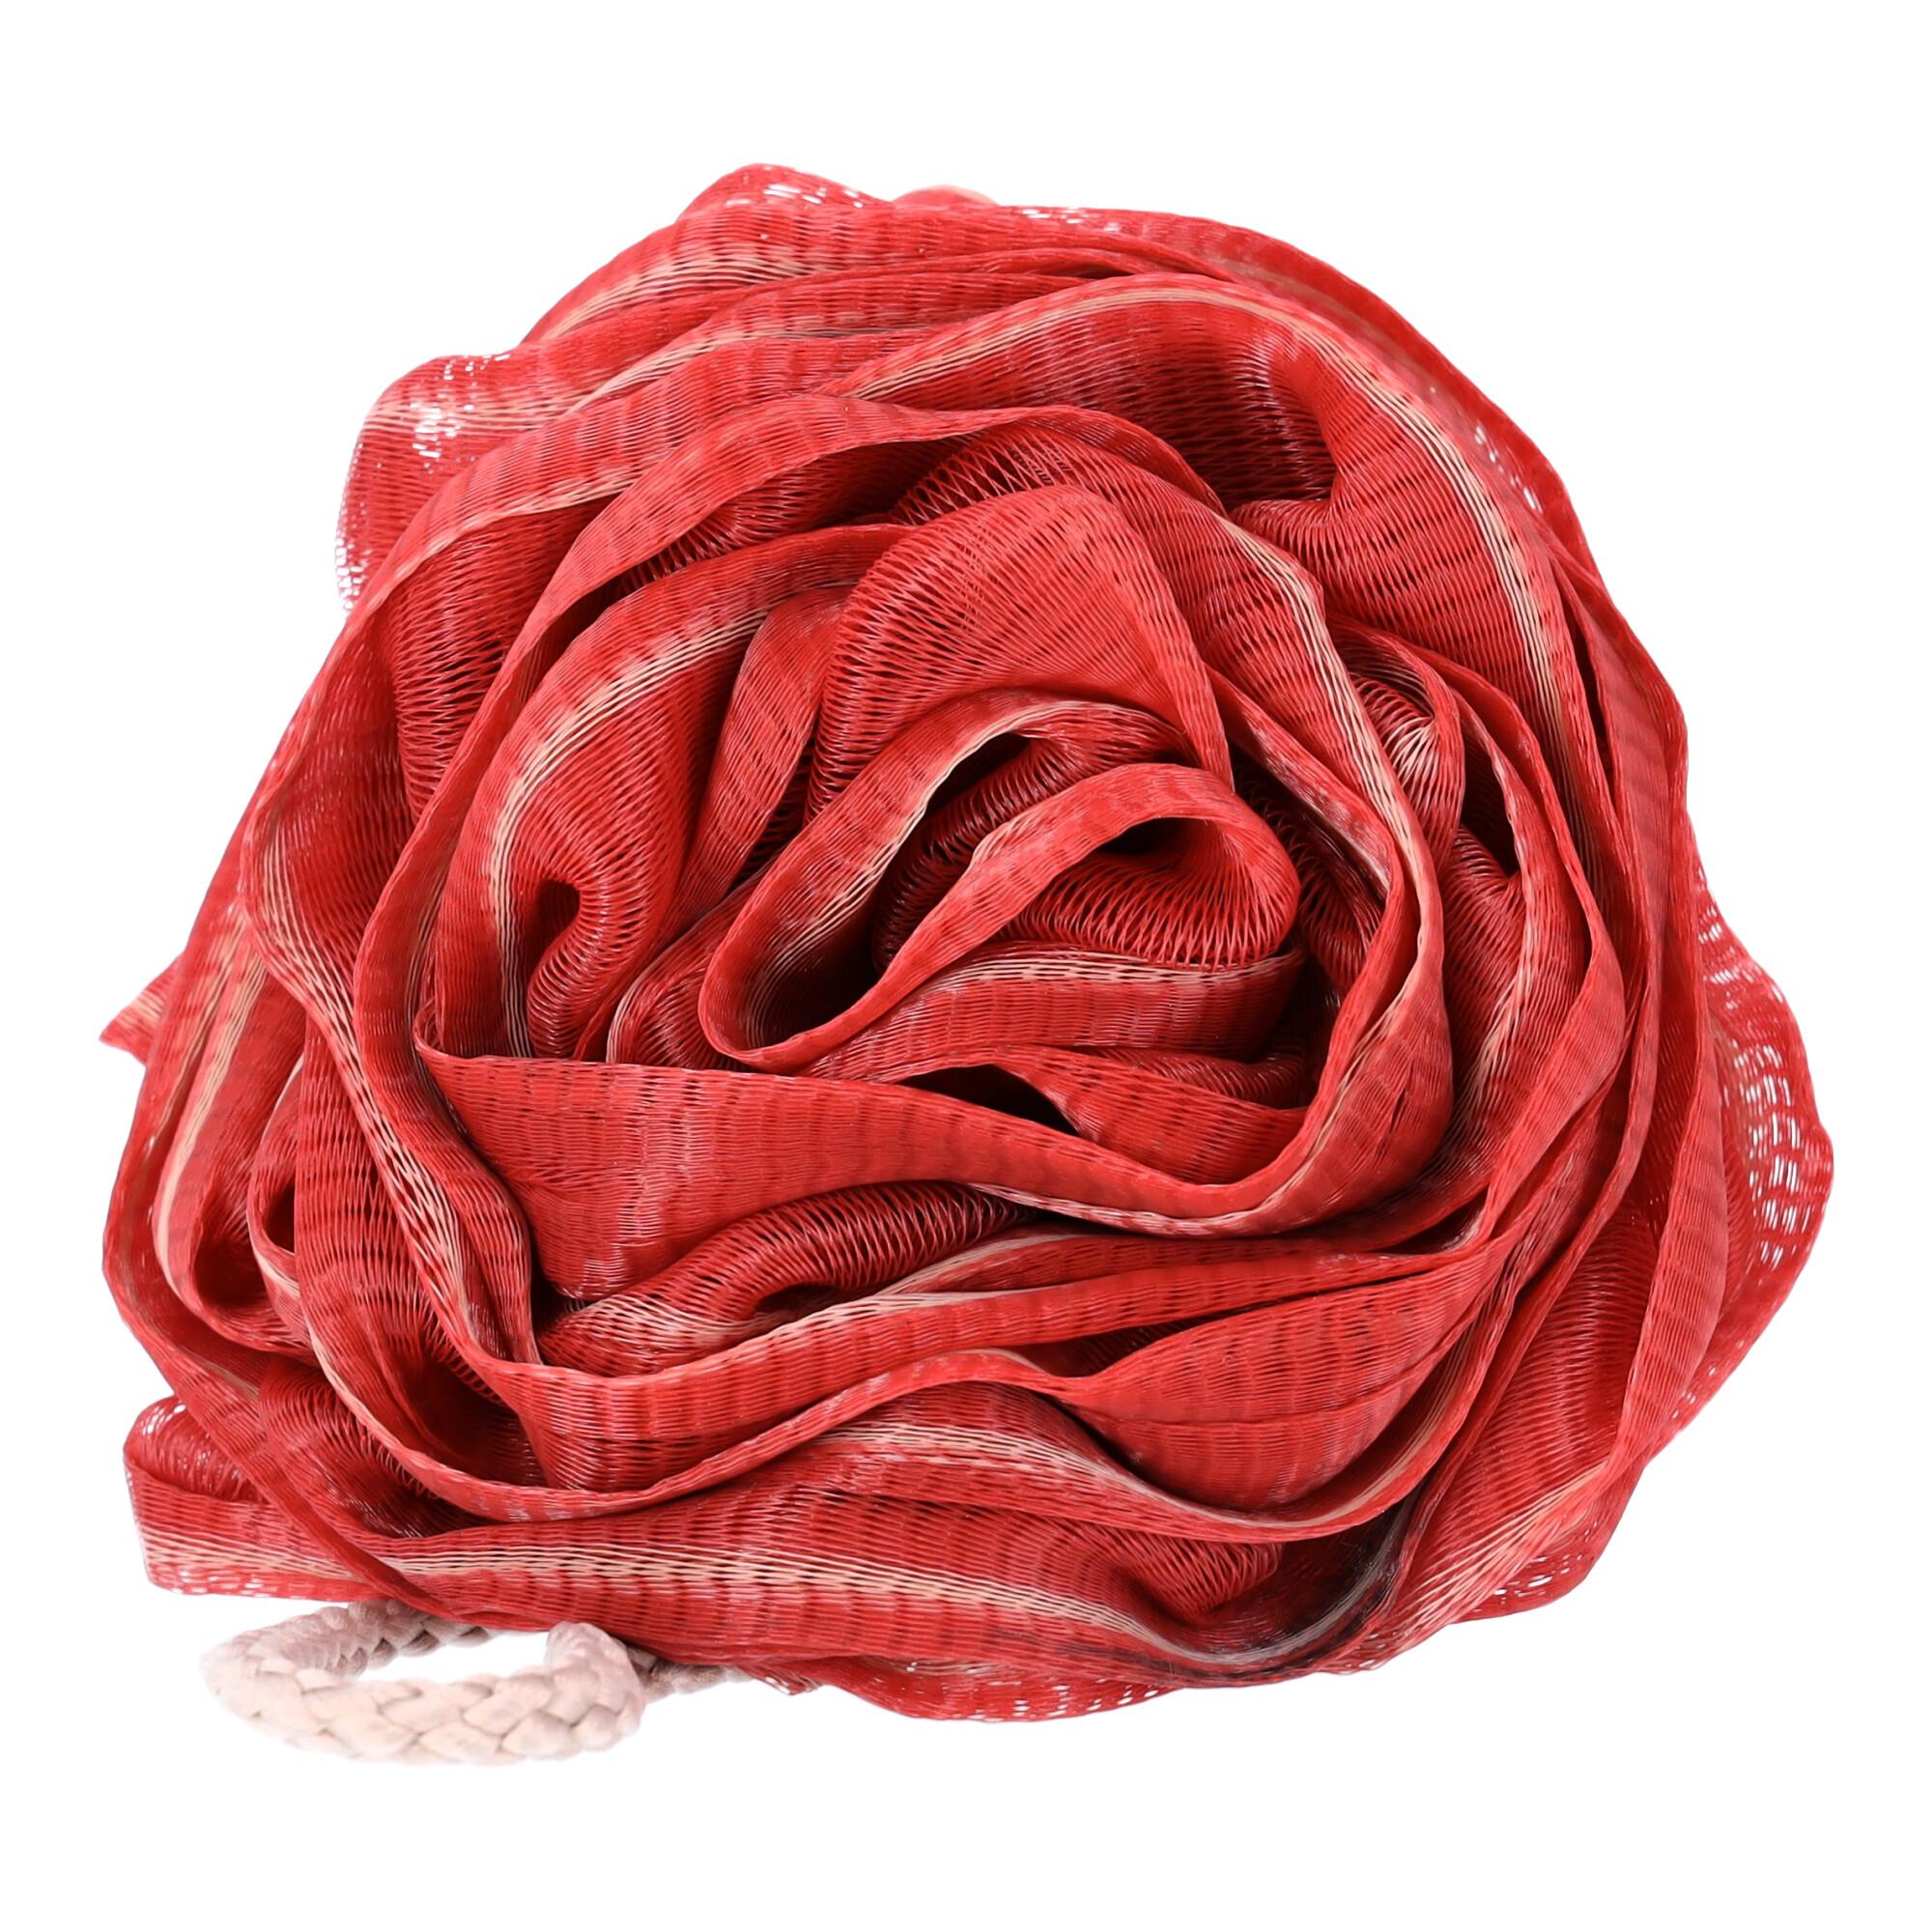 Washcloth, rose-shaped bath sponge - red